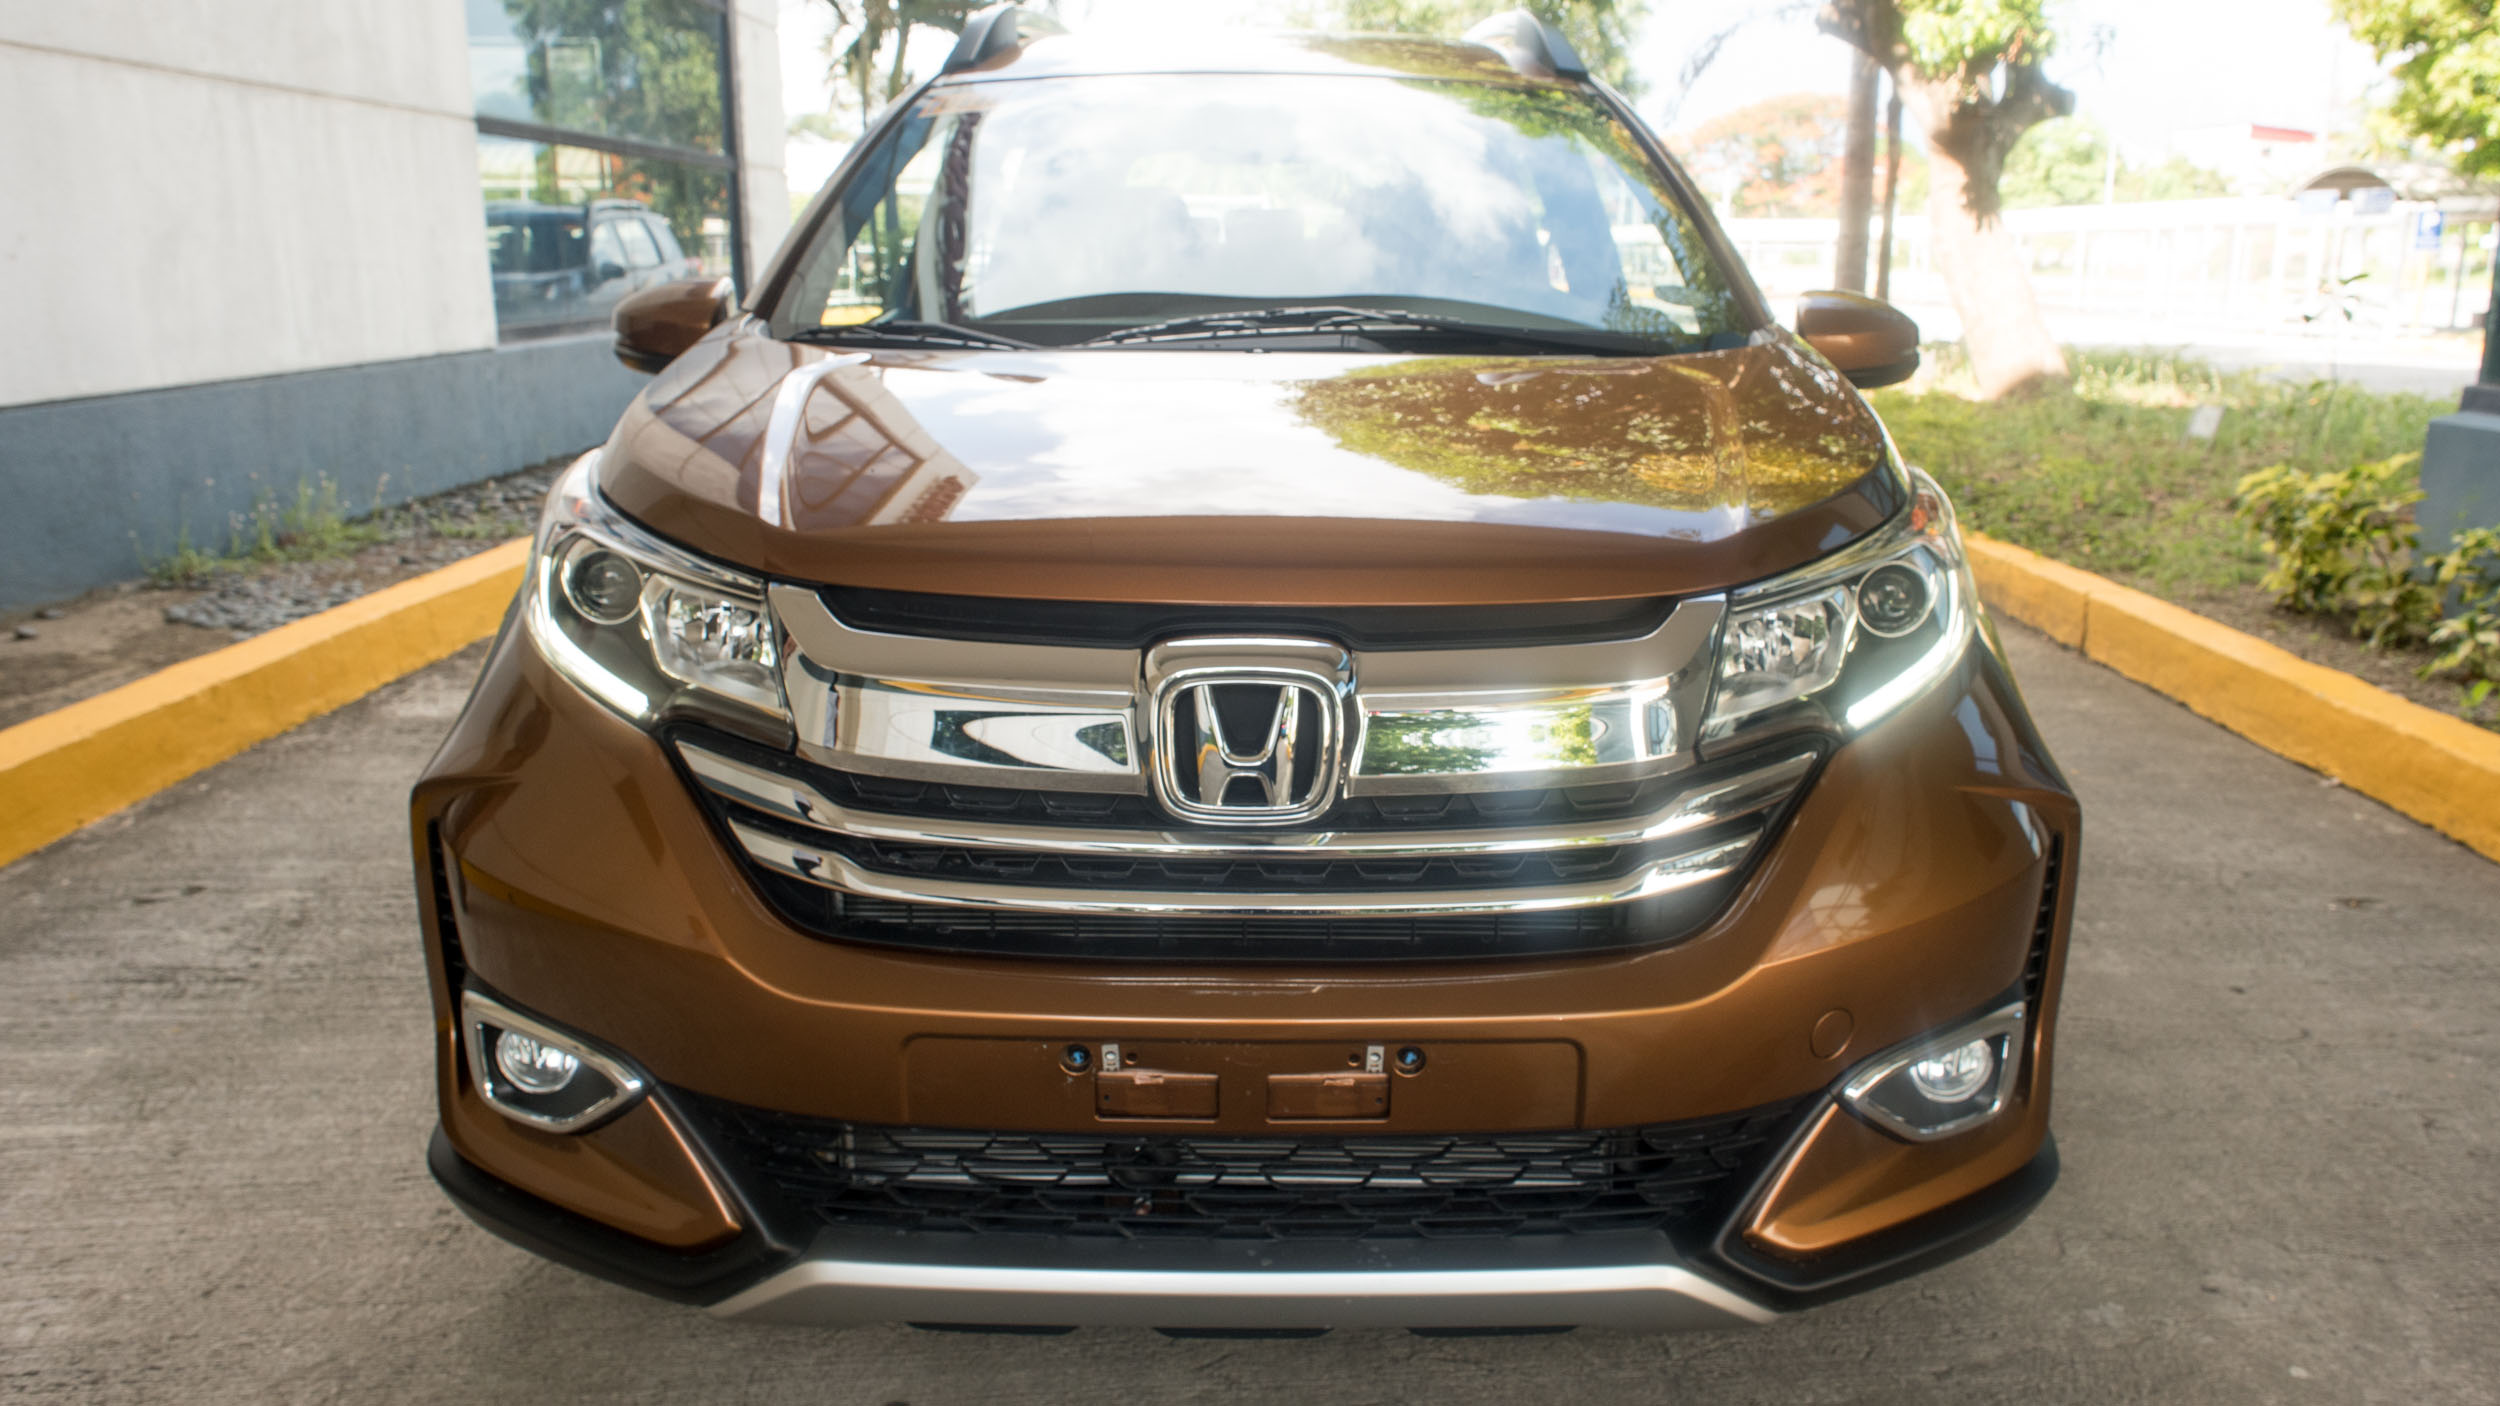 Honda Brv Price Malaysia 2019 : Honda Brv 2020 Malaysia - Car Review